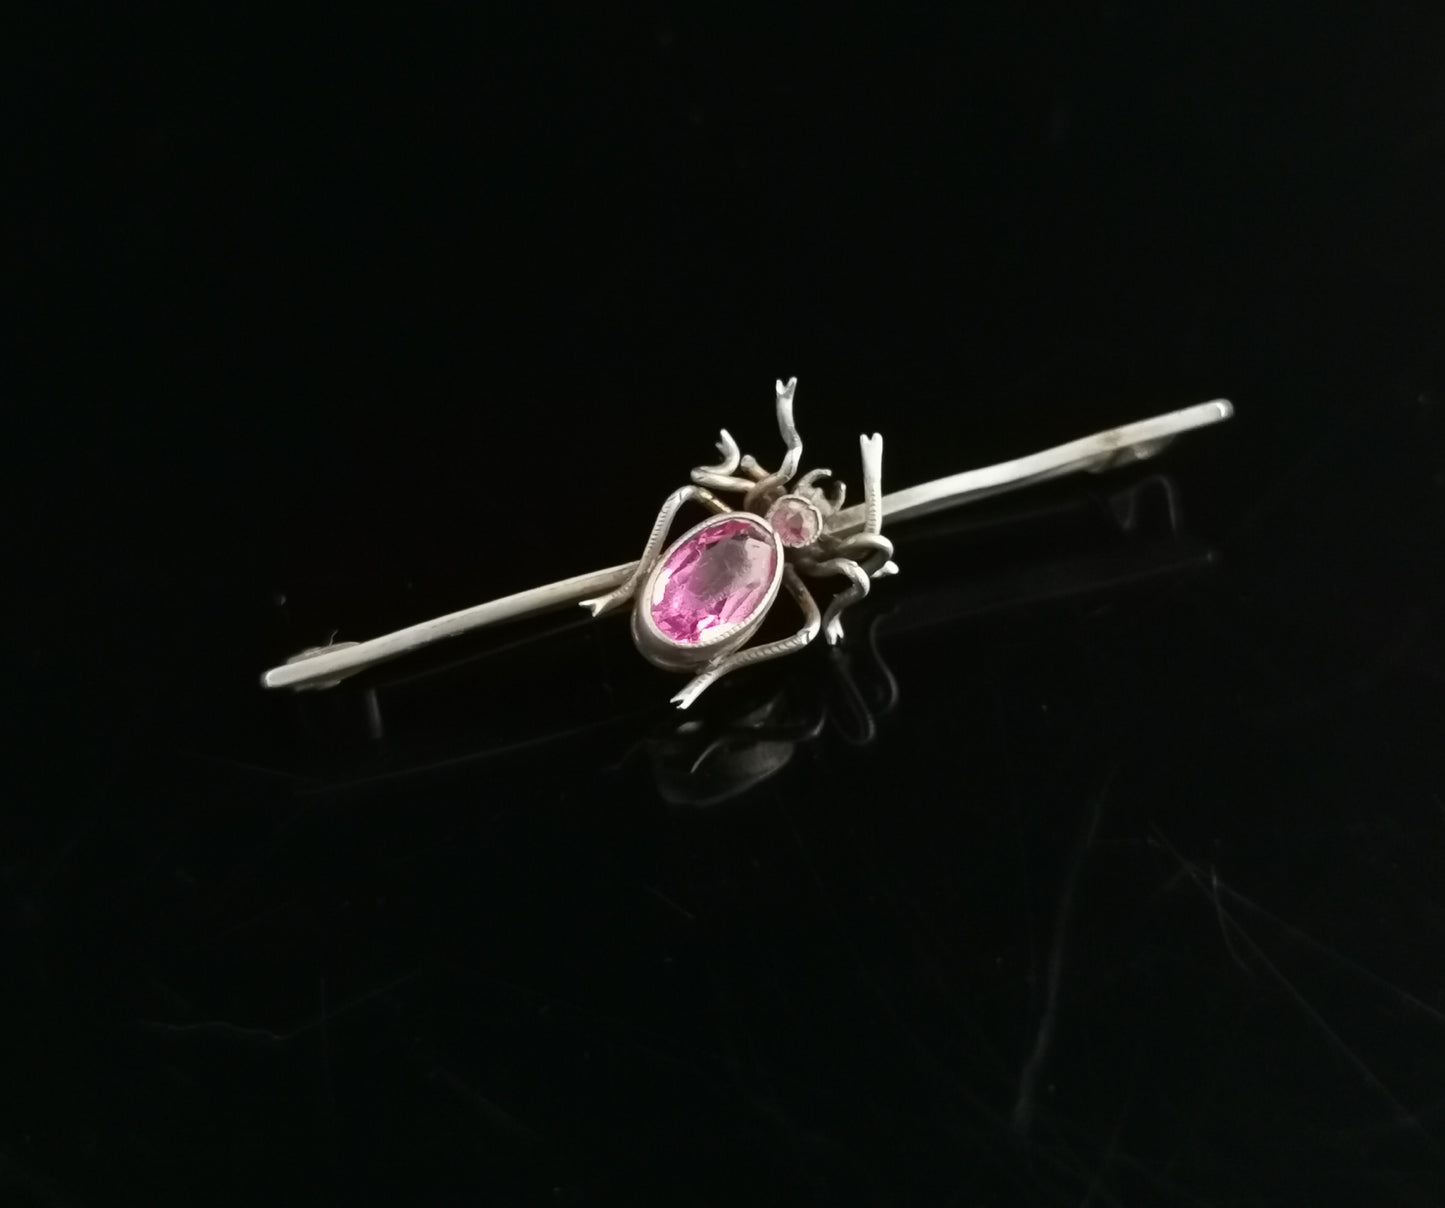 Antique Edwardian spider brooch, pin, pink paste